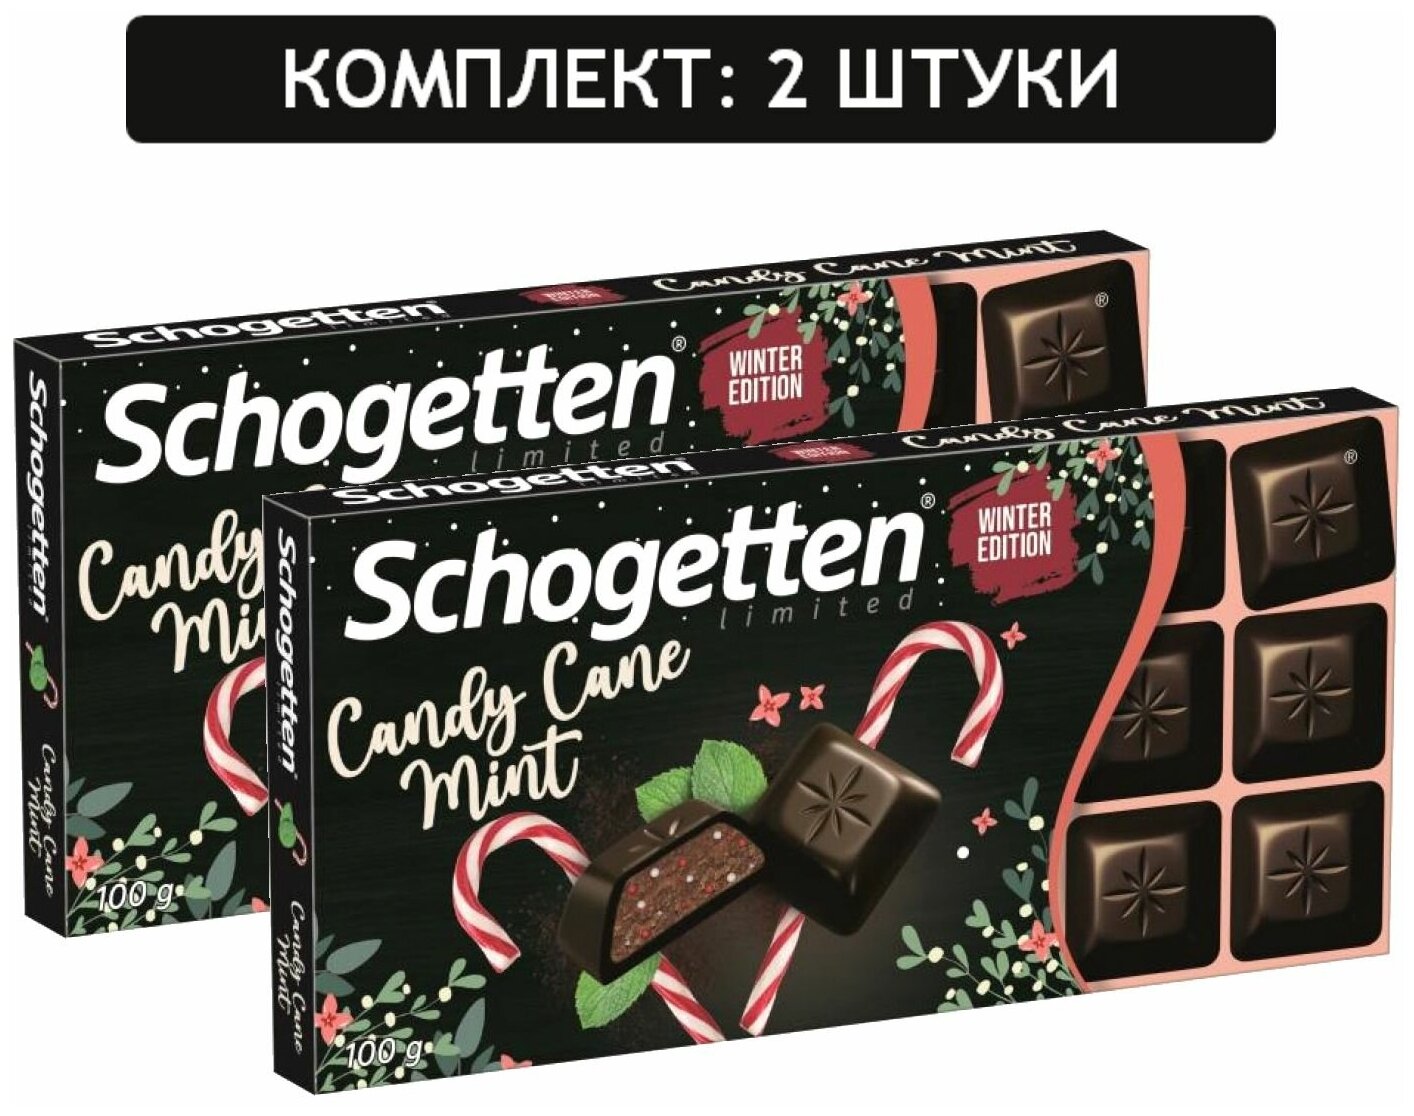 Шоколад темный Schogetten Candy Cane Mint 2шт по 100гр